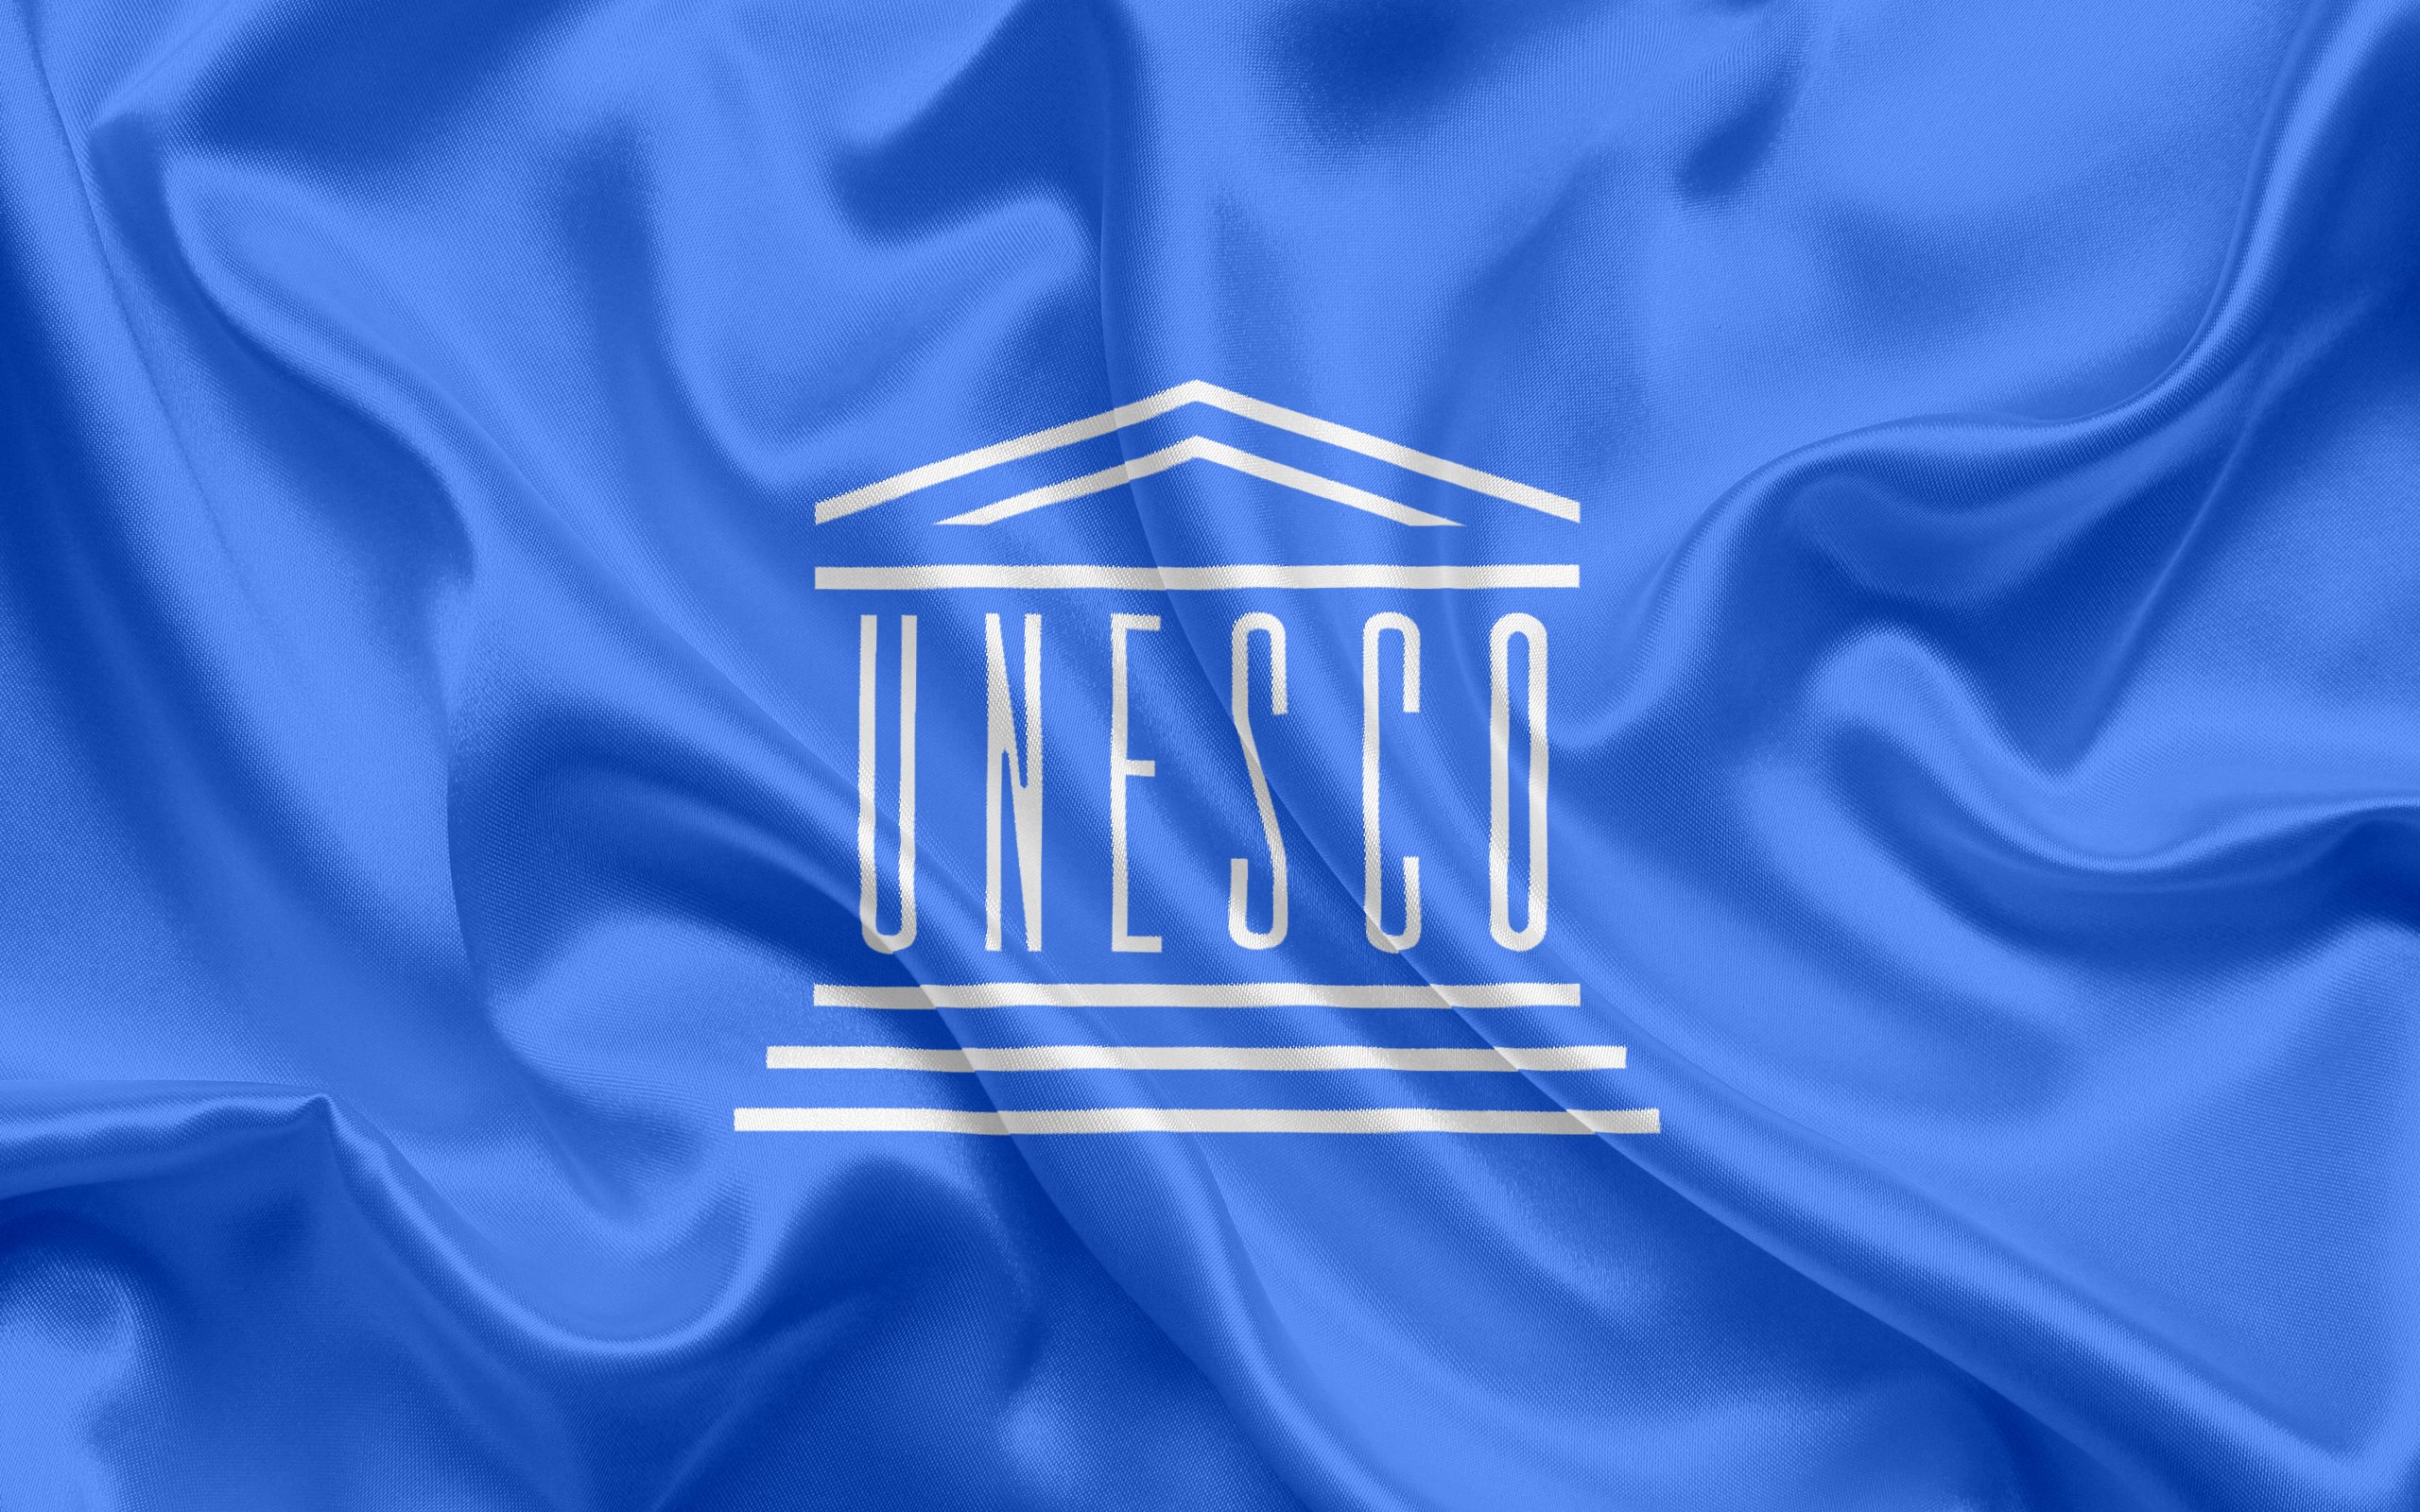 Unesco org